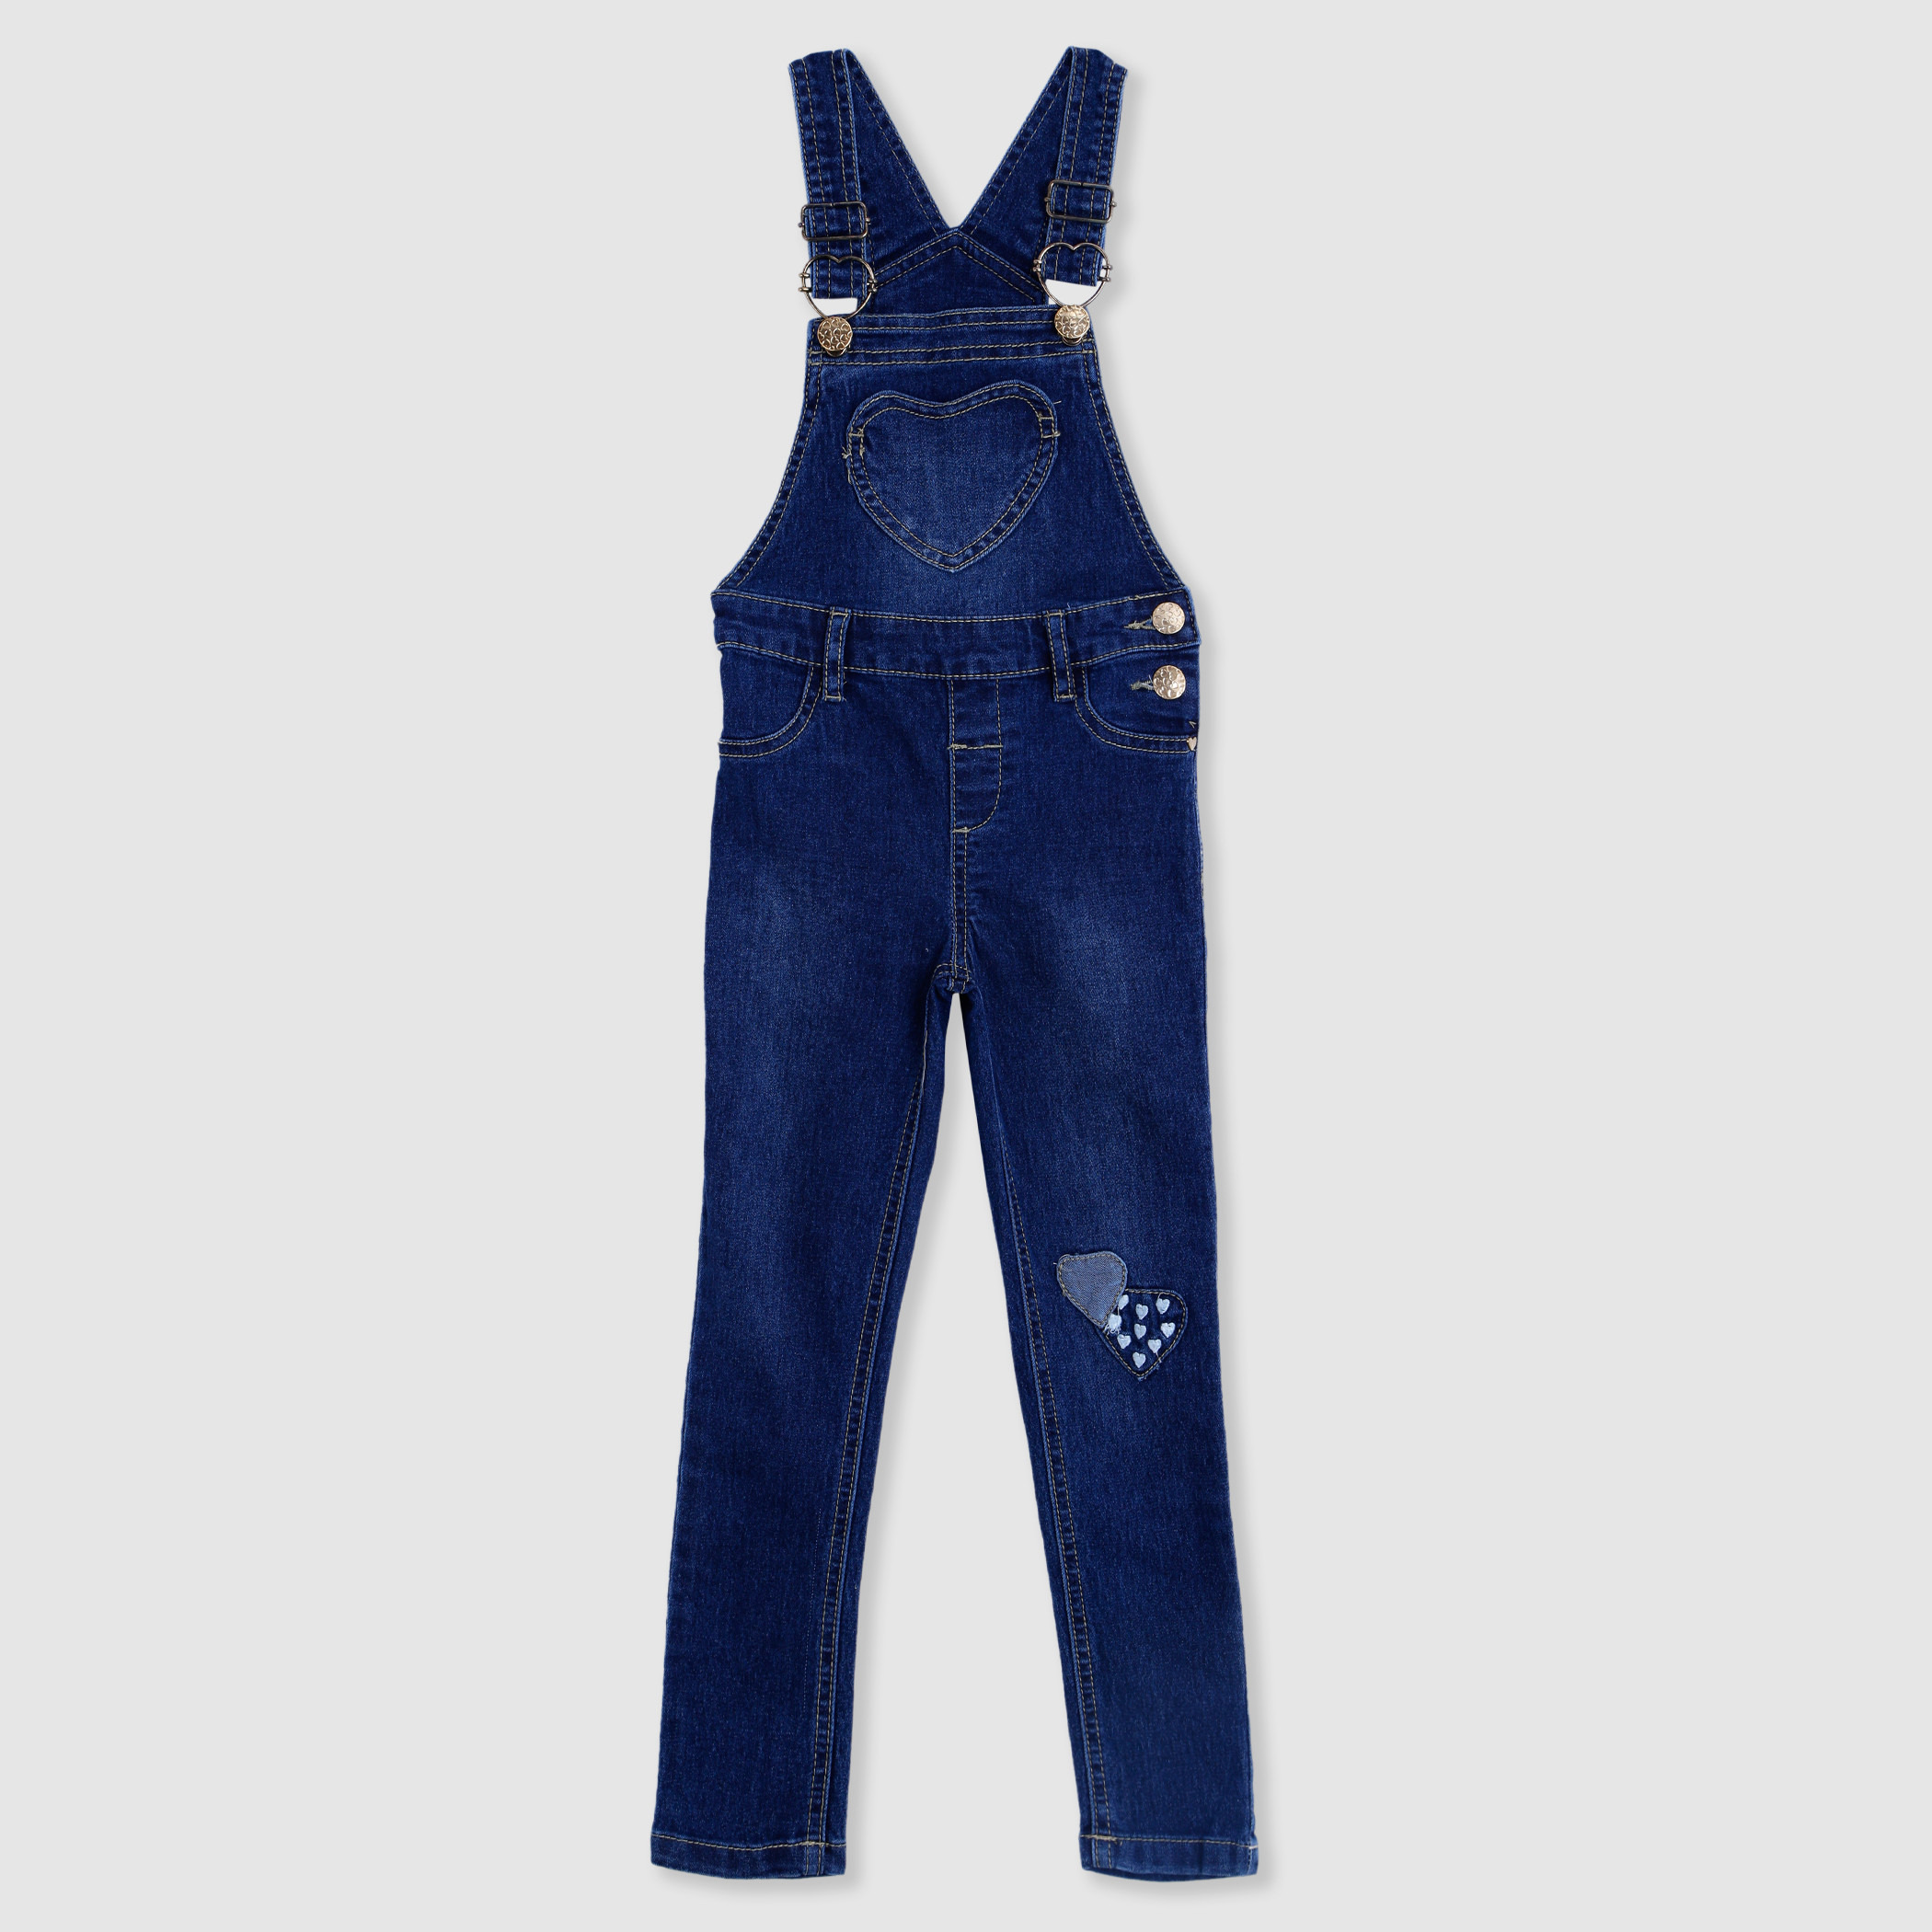 JustVH Men Casual Workwear Ripped Full-length Overalls Criss-cross Denim  Bib pants - Walmart.com